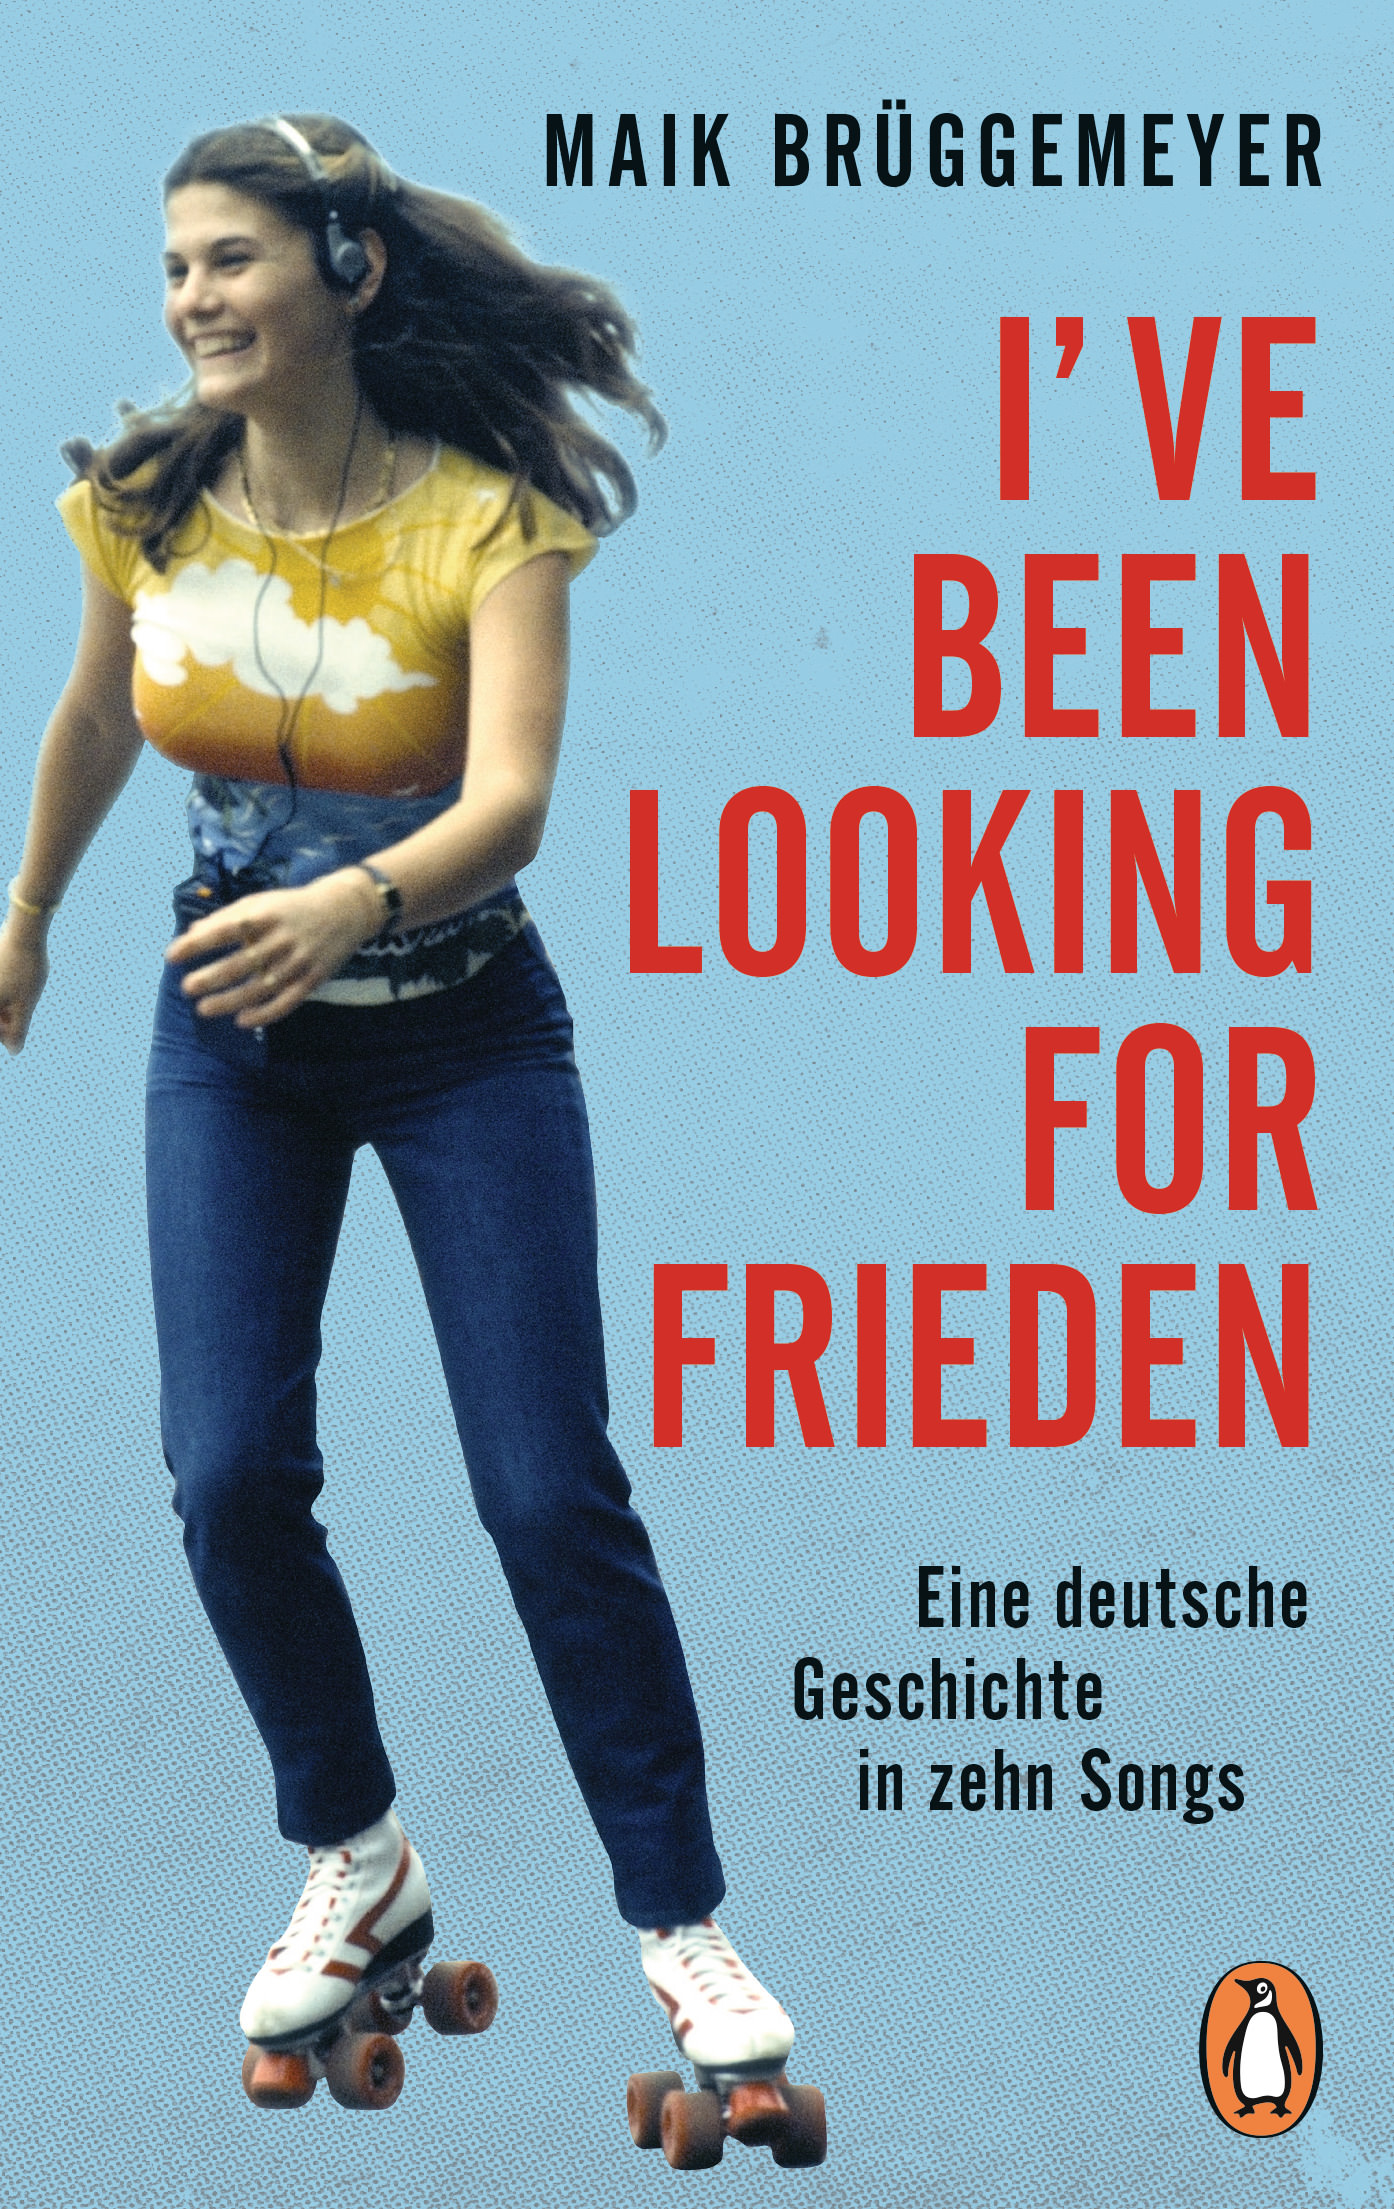 Buchcover: Maik Brüggemeyer: I’ve been looking for Frieden